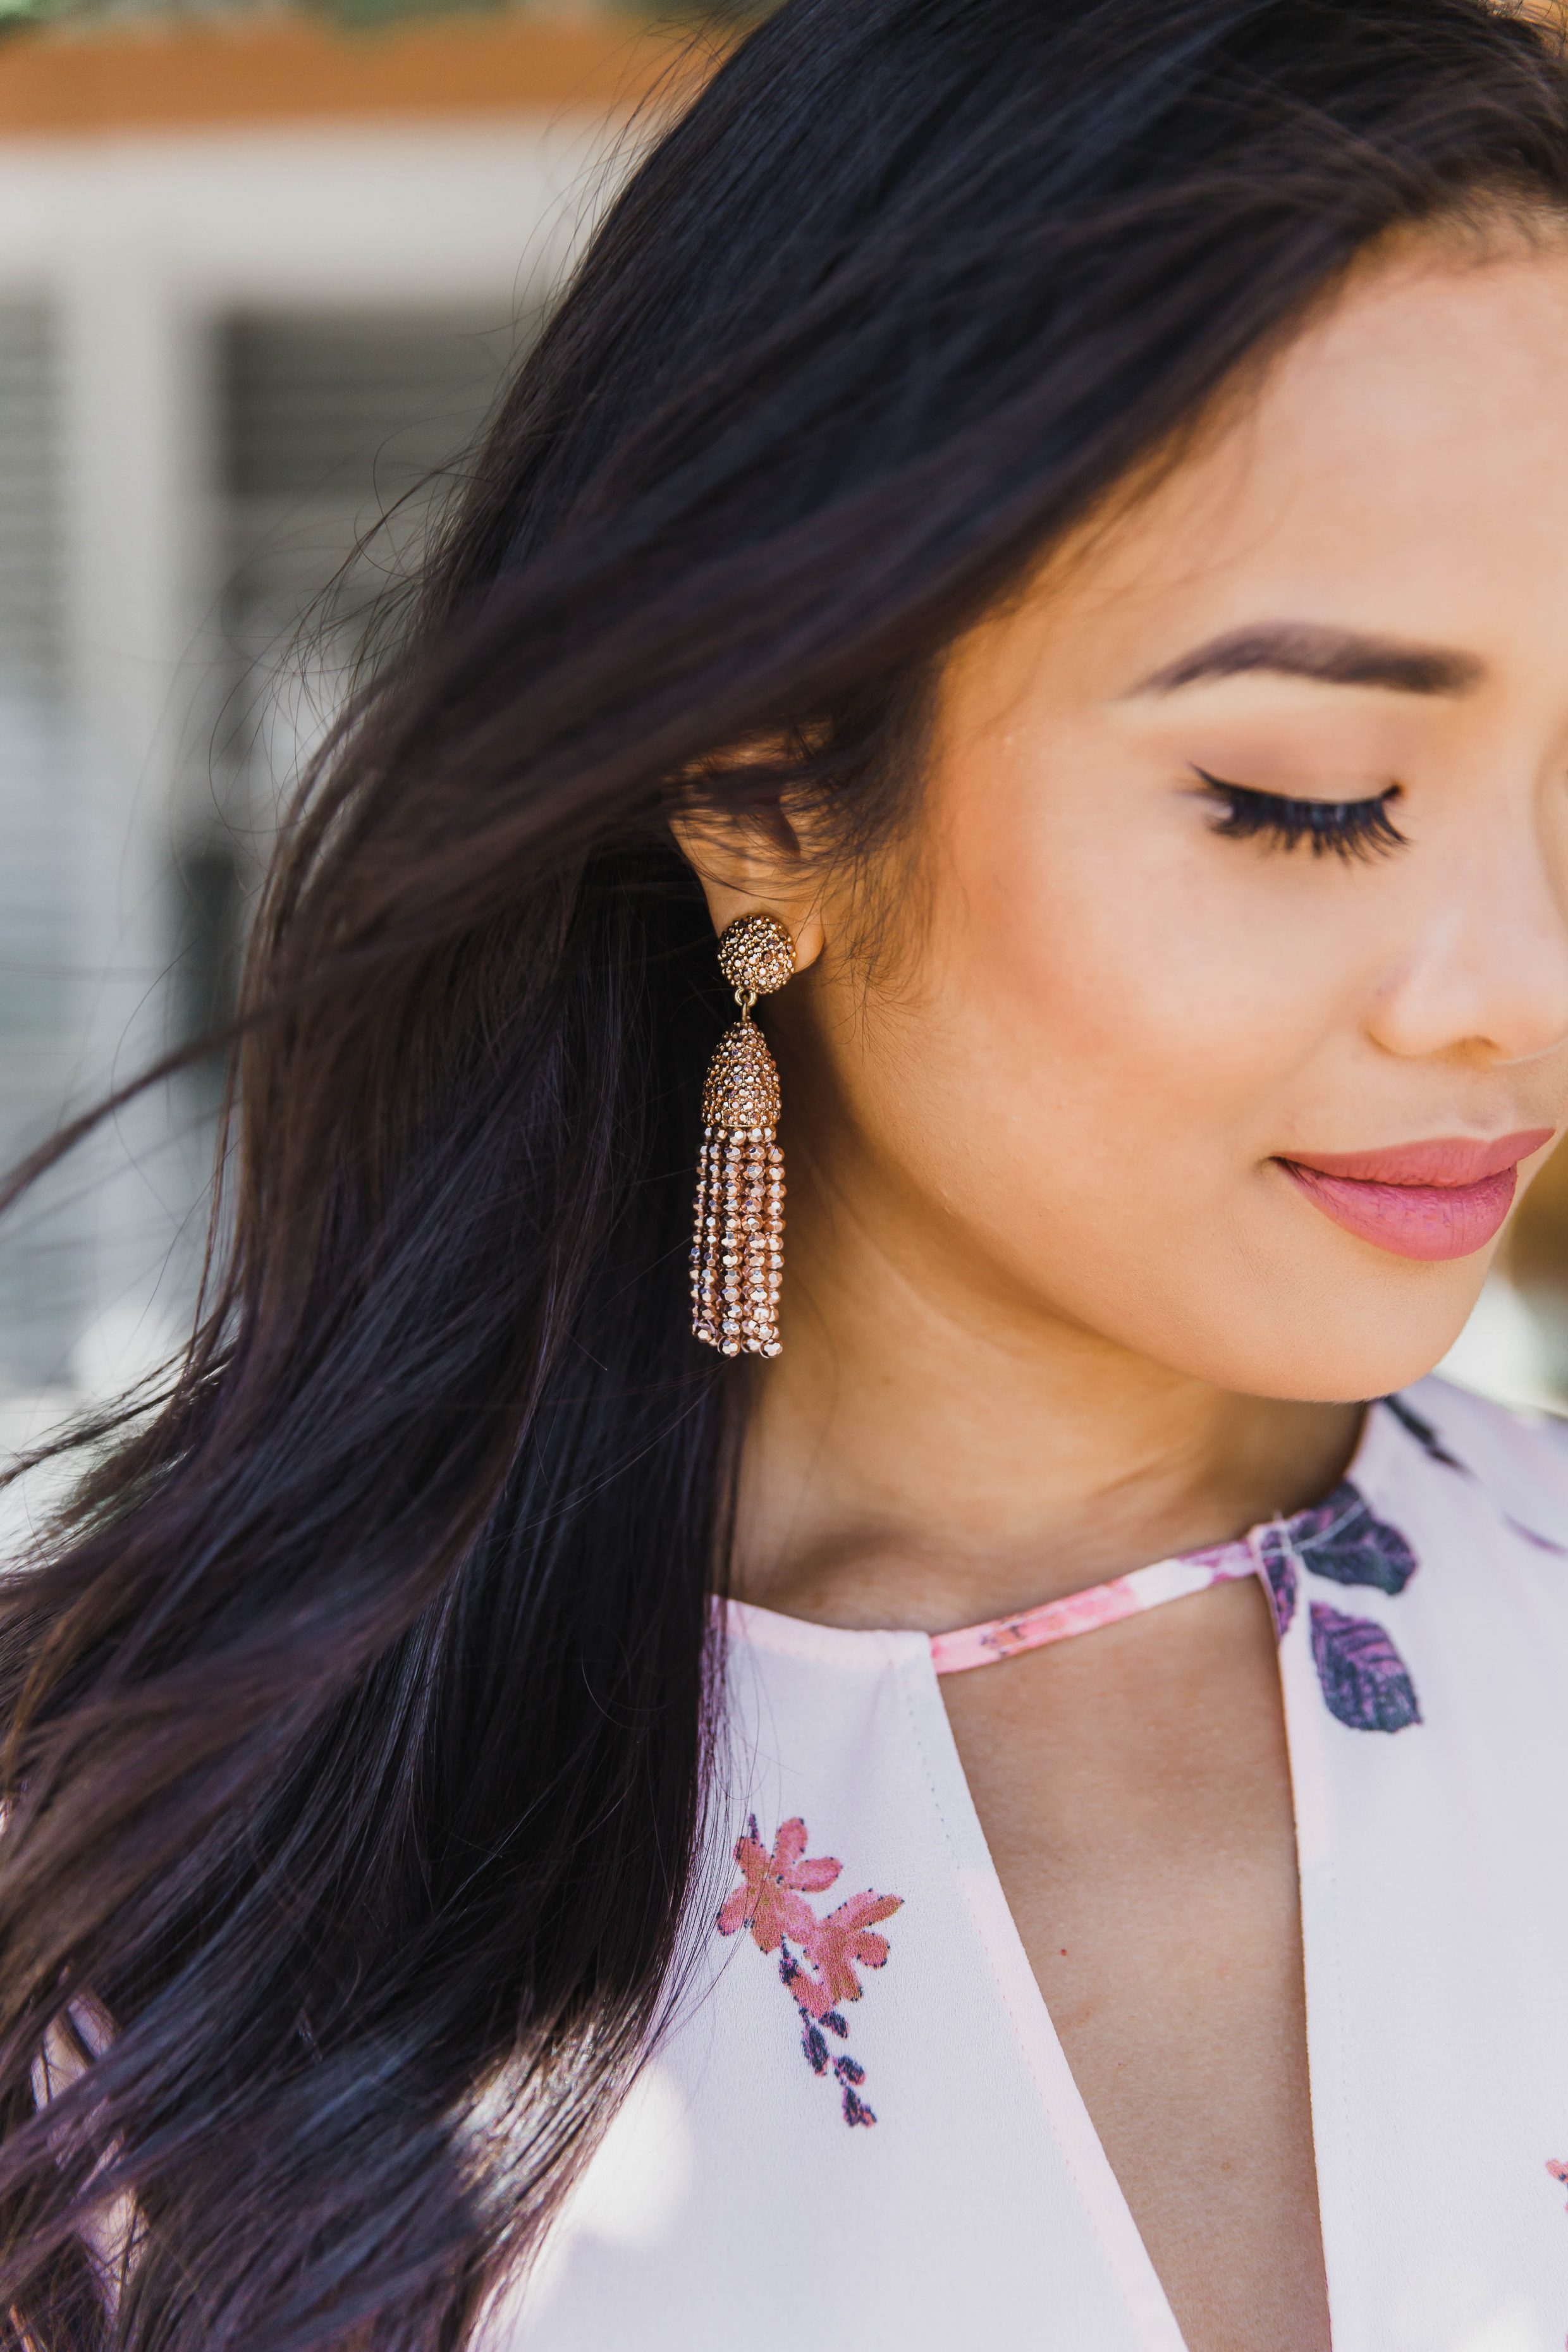 COLOR & CHIC | Pink Floral Mini Dress + Tassel Earrings